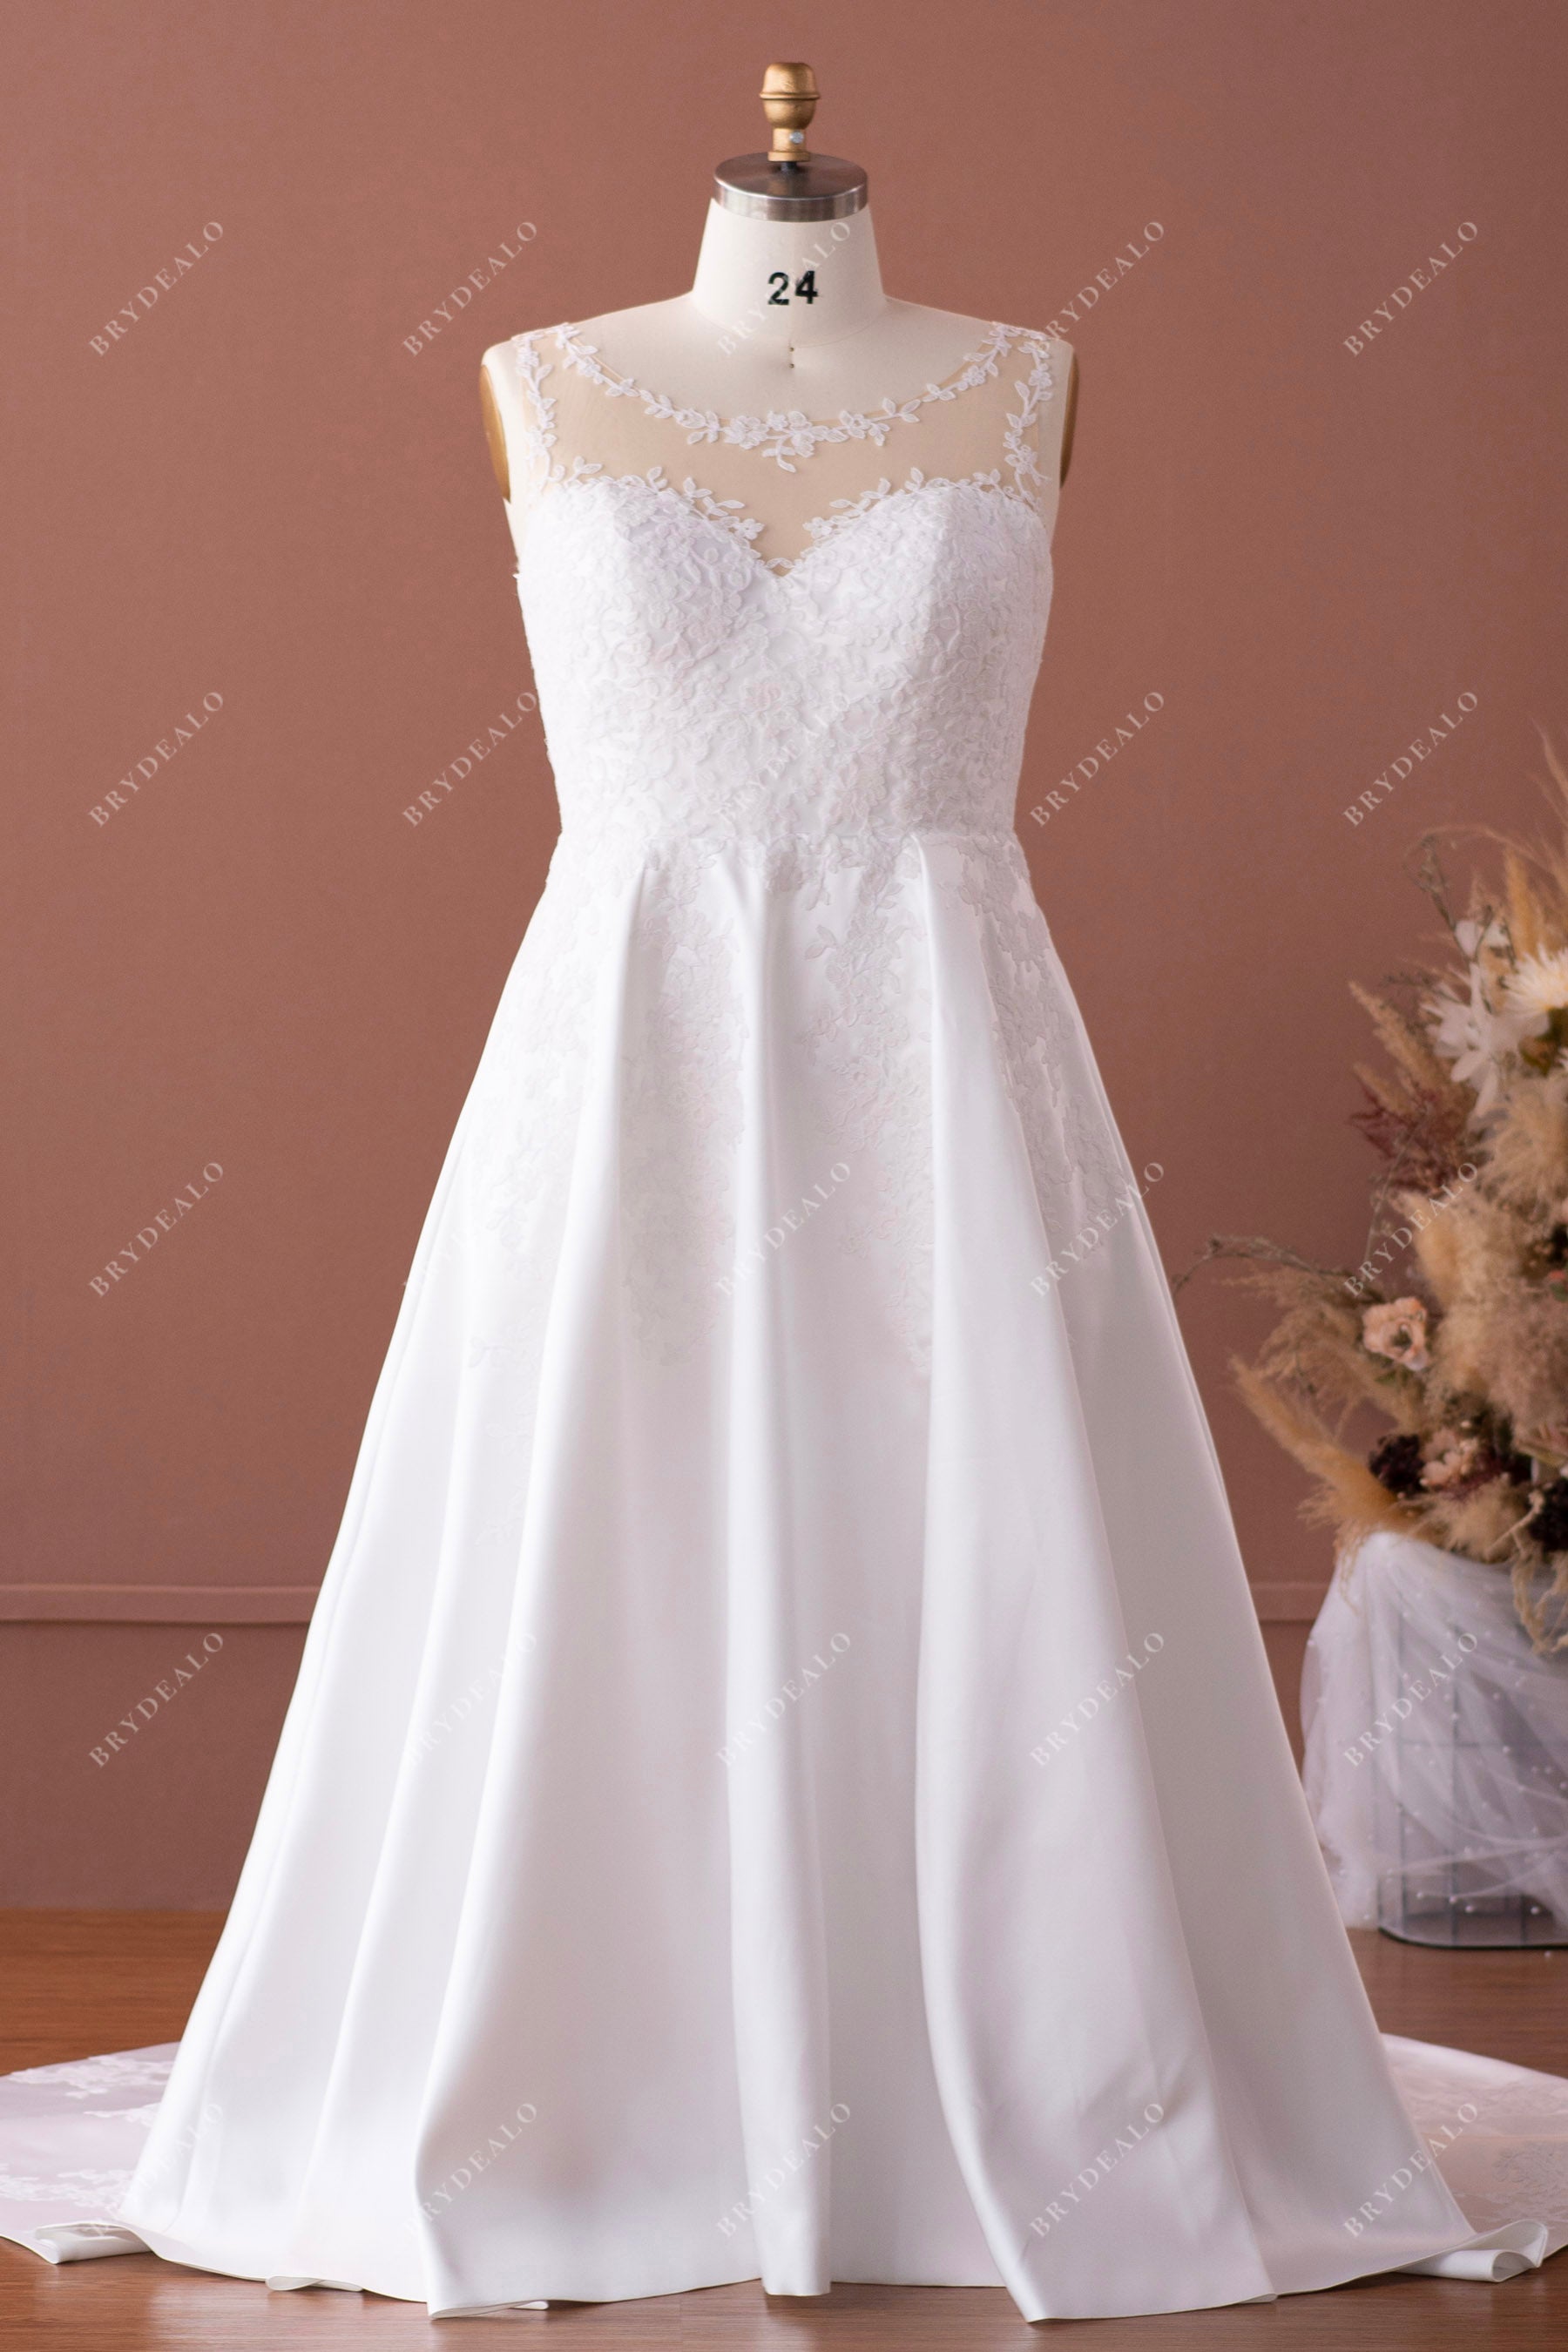 Satin Wedding Dress with Illusion Neckline